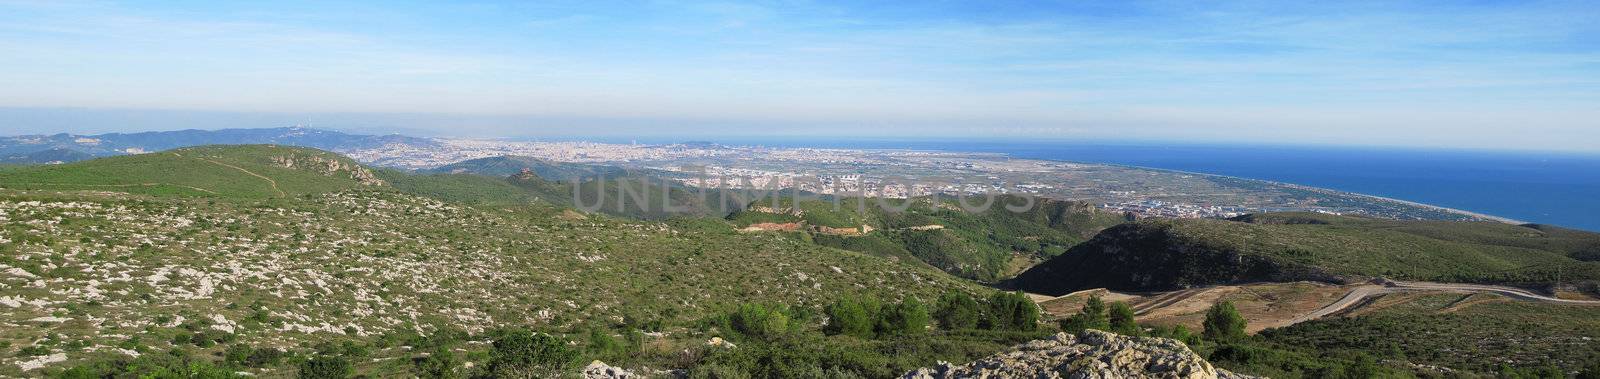 Panorama view towards Barcelona from the Garraf Natural Park